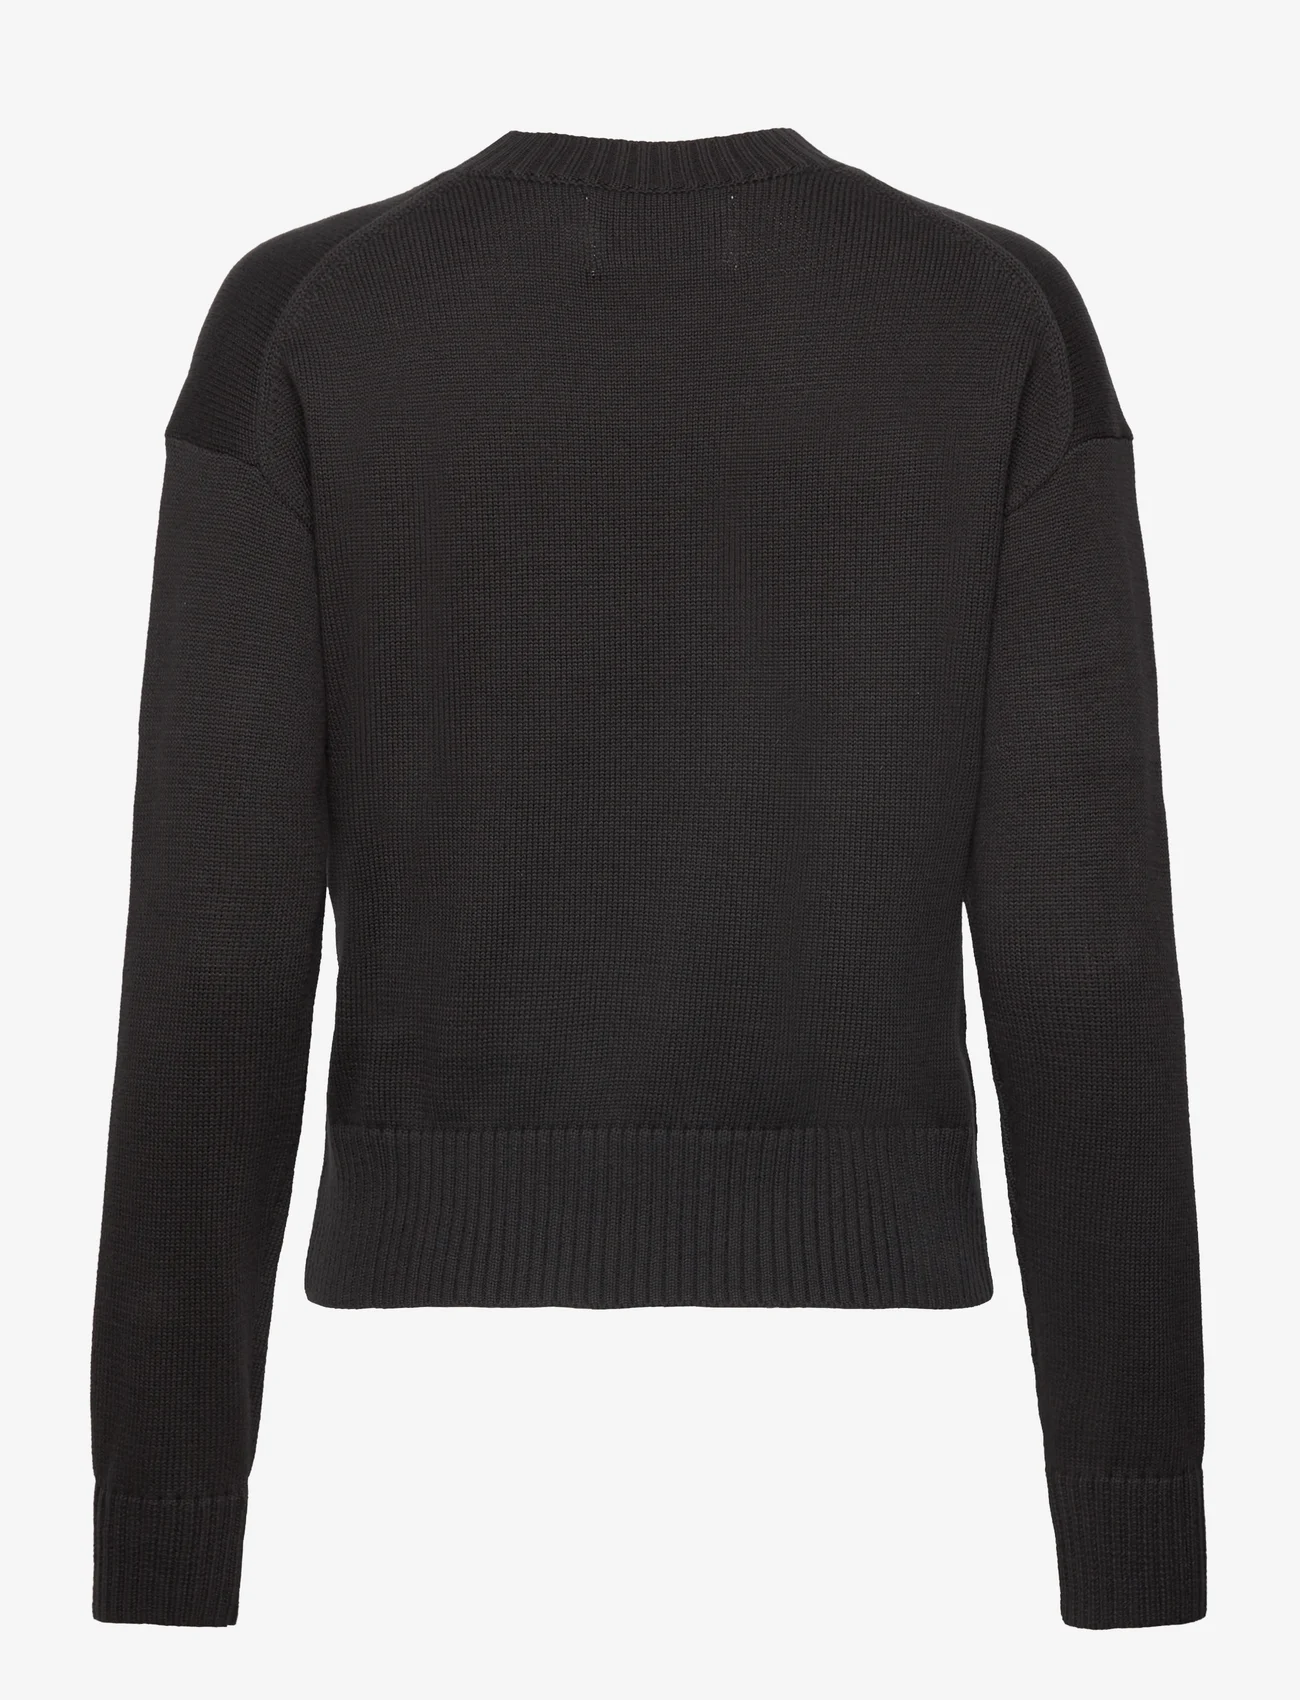 Calvin Klein Jeans - CK EMBRO BADGE SWEATER - swetry - ck black - 1